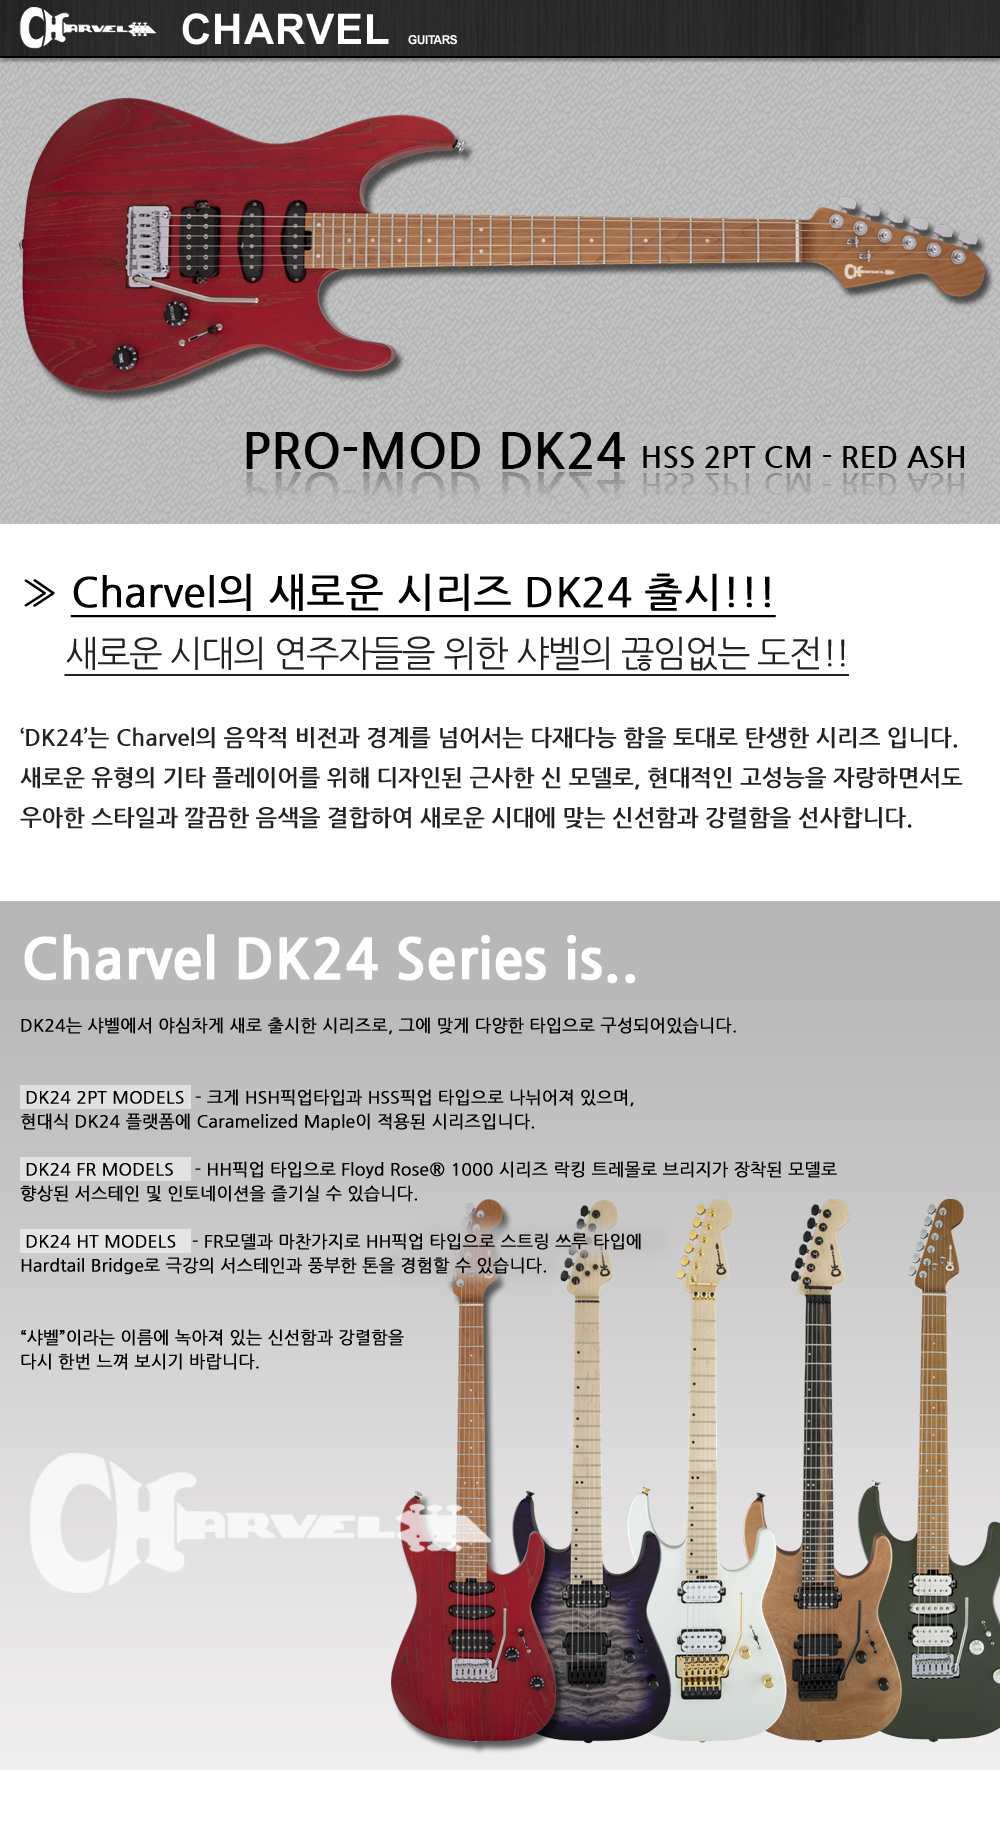 Chravel-DK24-HSS-2PT-CM-RedAsh_1_131051.jpg